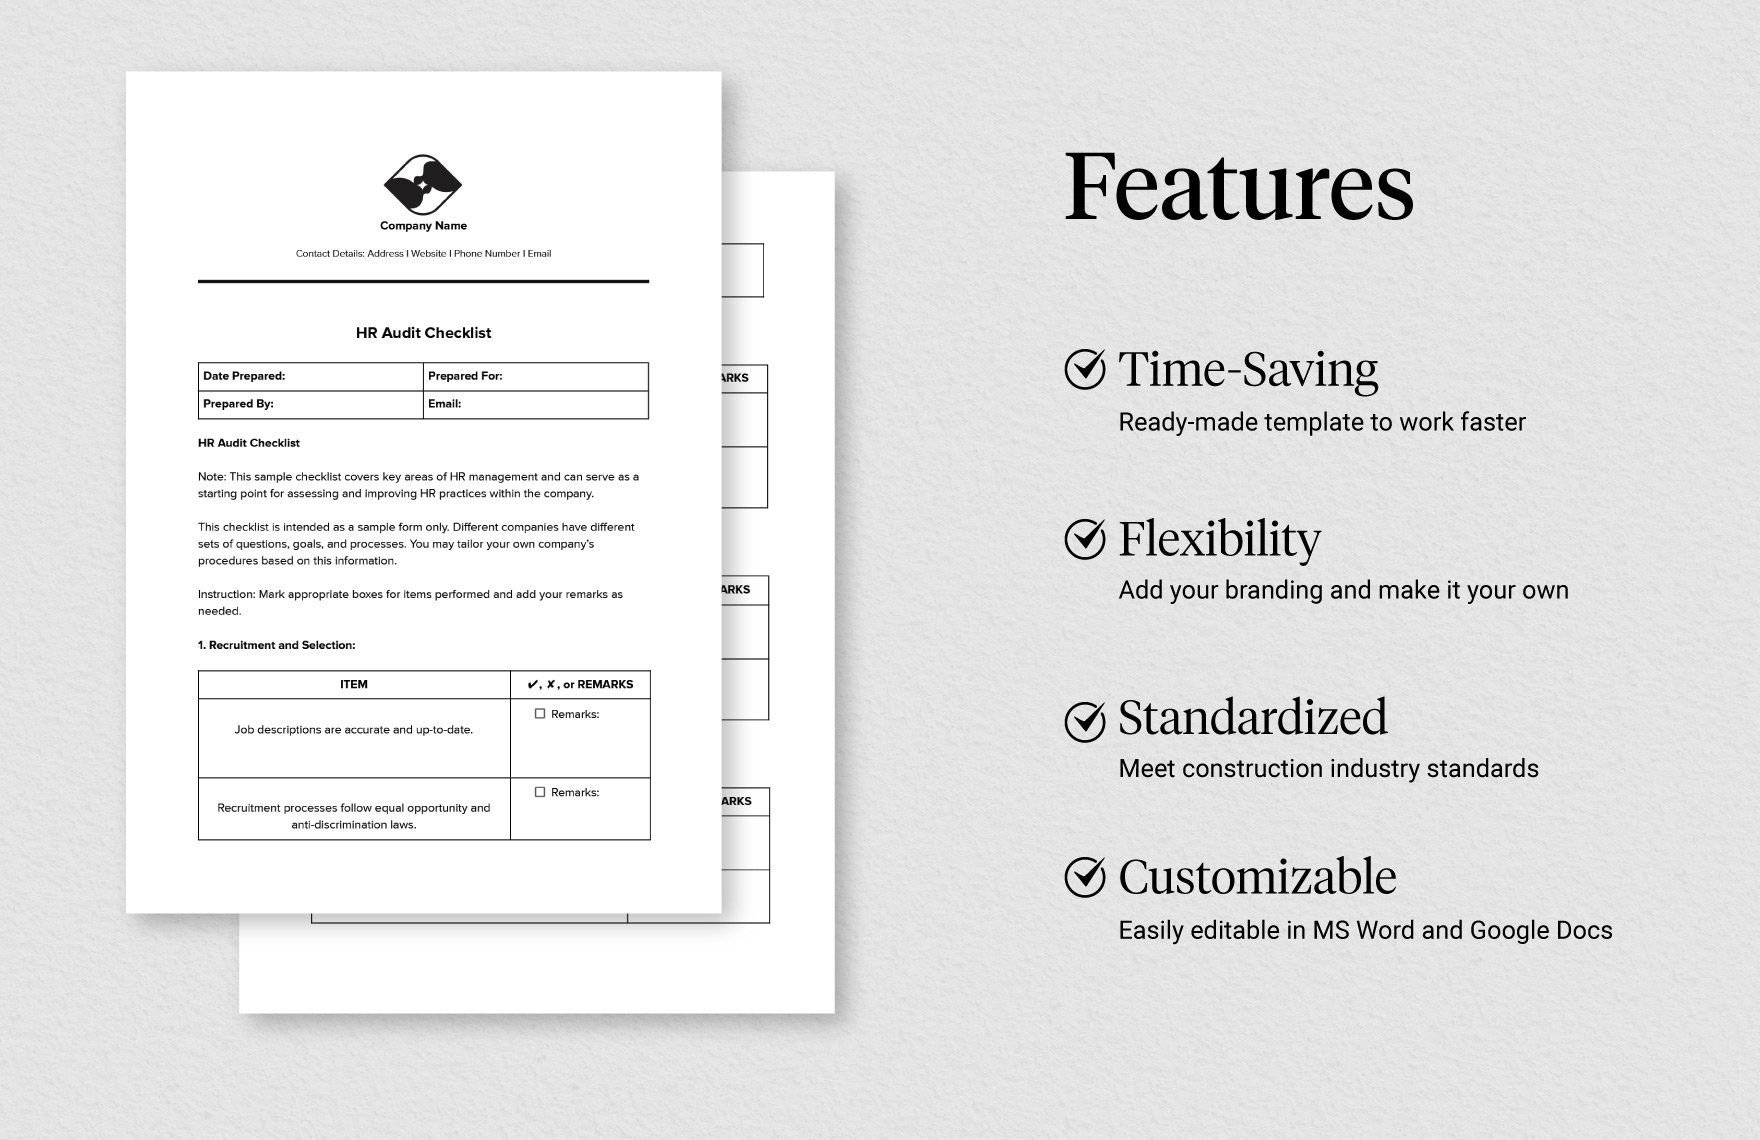 Sample HR Audit Checklist Template